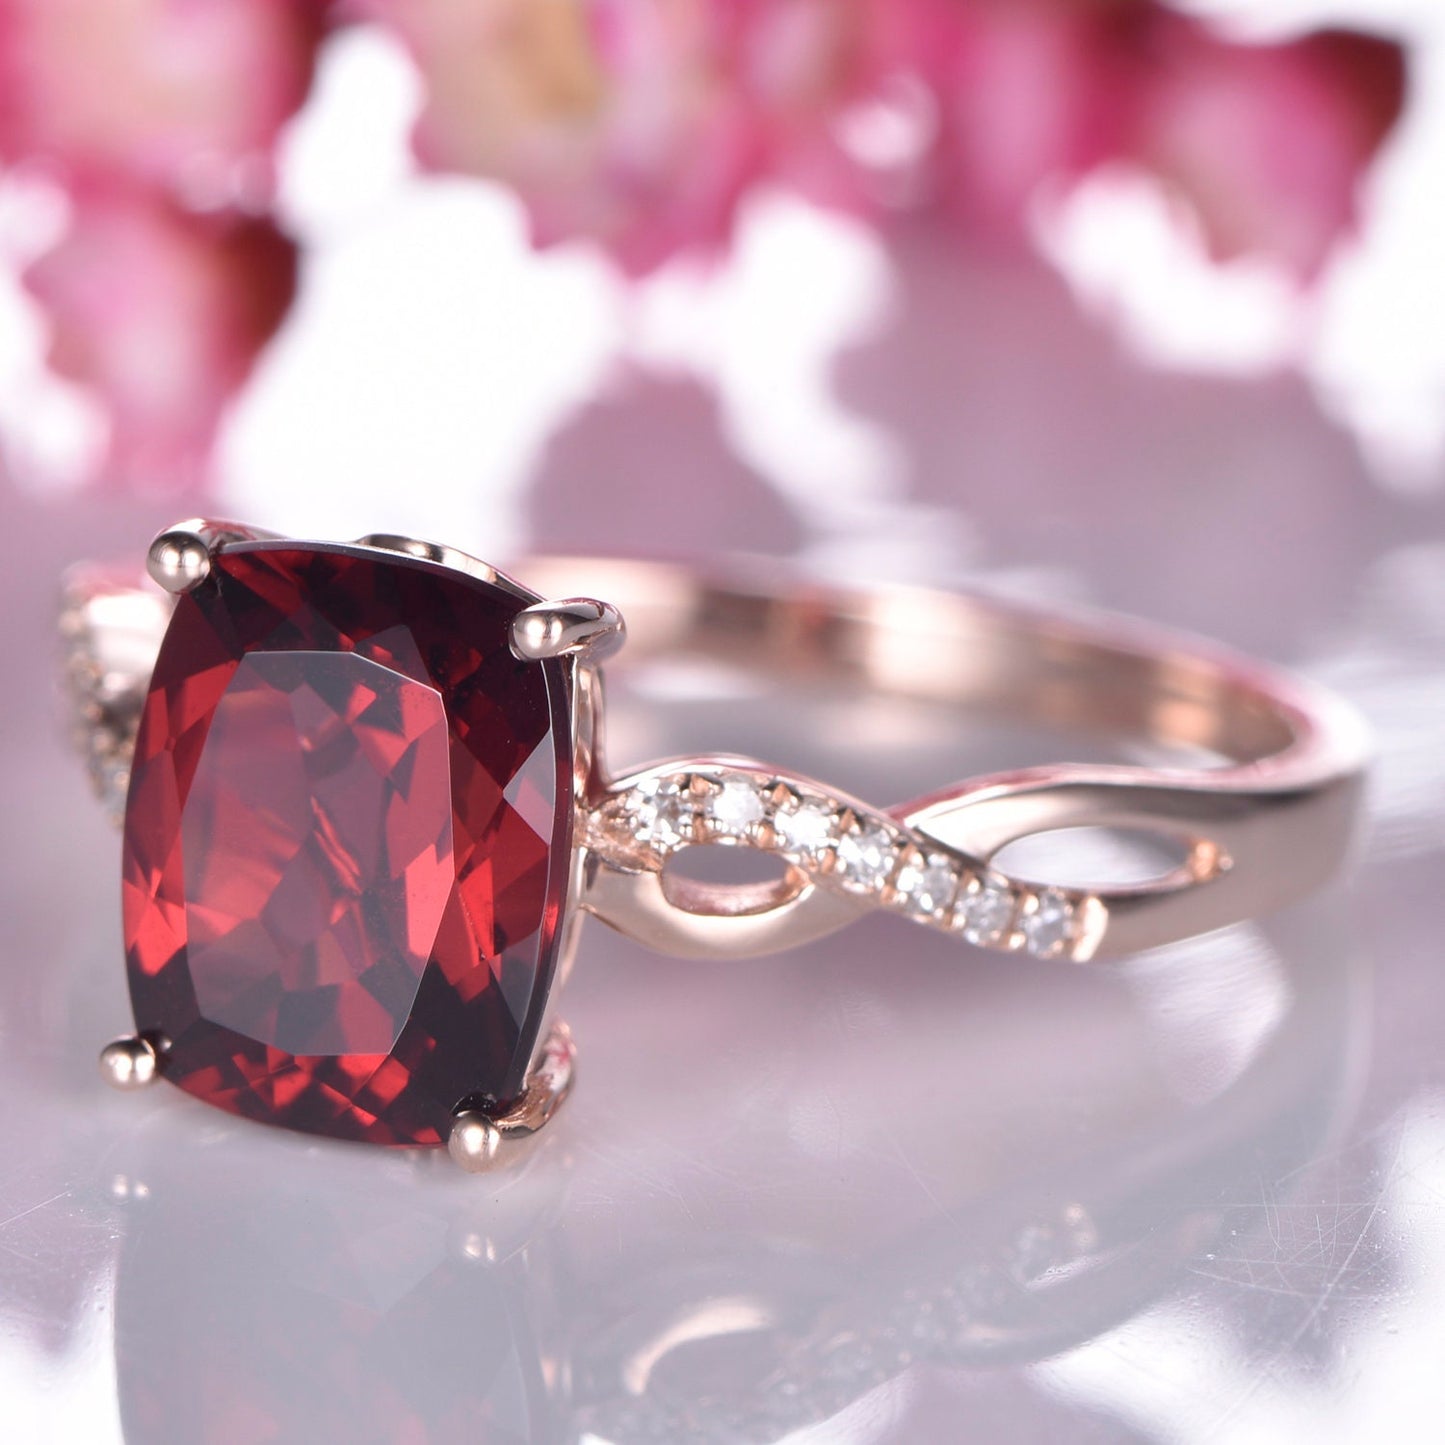 Garnet engagement ring 14k rose gold diamond wedding ring 7X9mm cushion cut natural VS garnet gemstone women promise ring solitaire ring